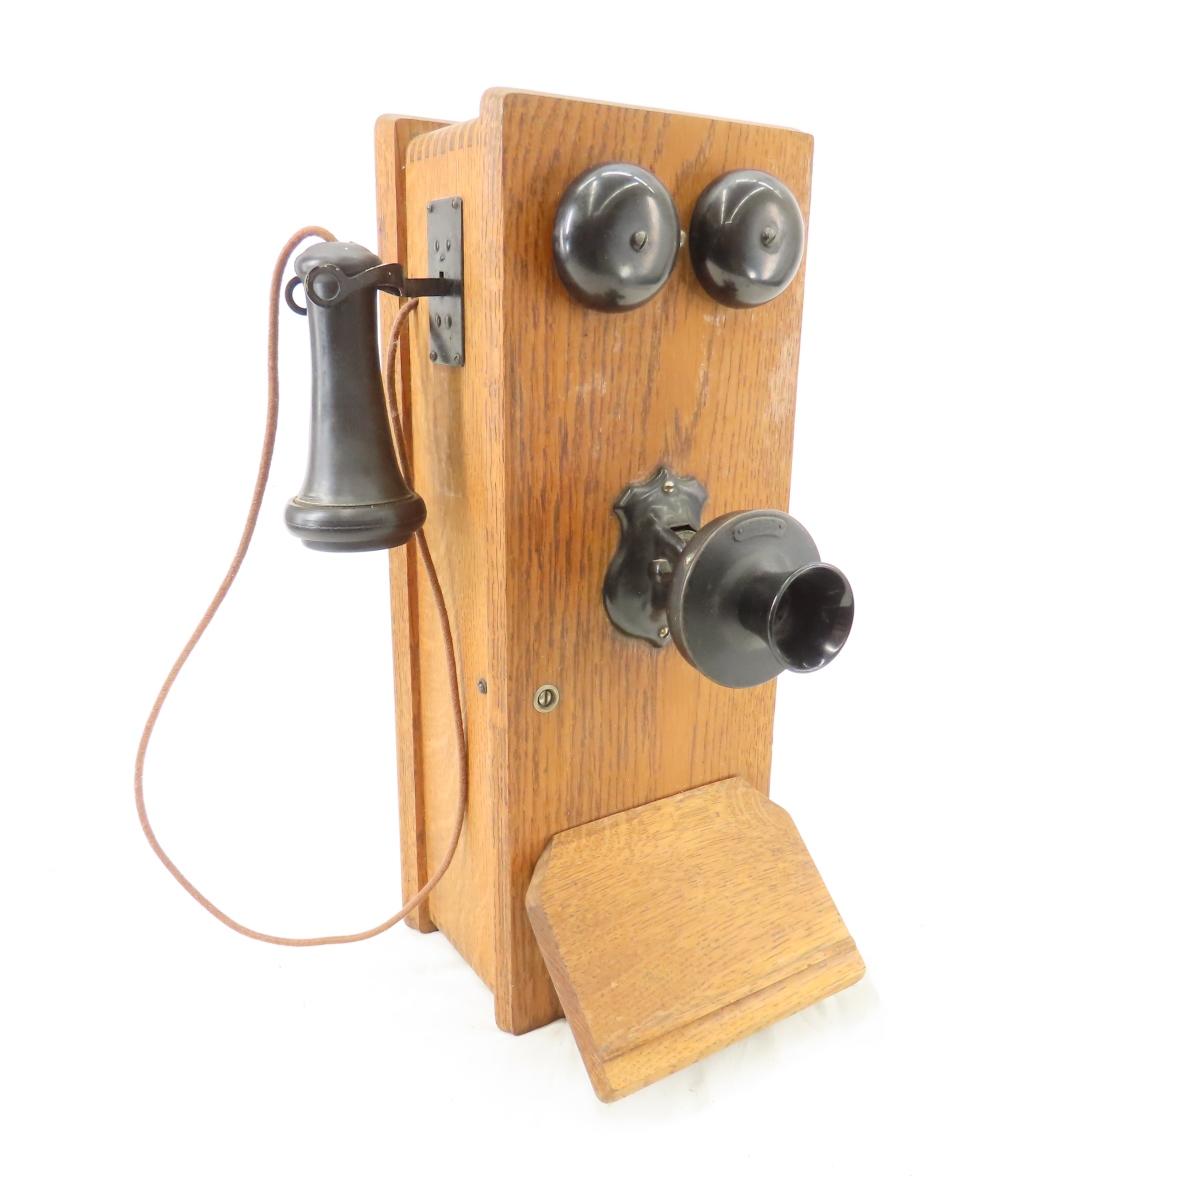 Western Electric Wall Crank Telephone